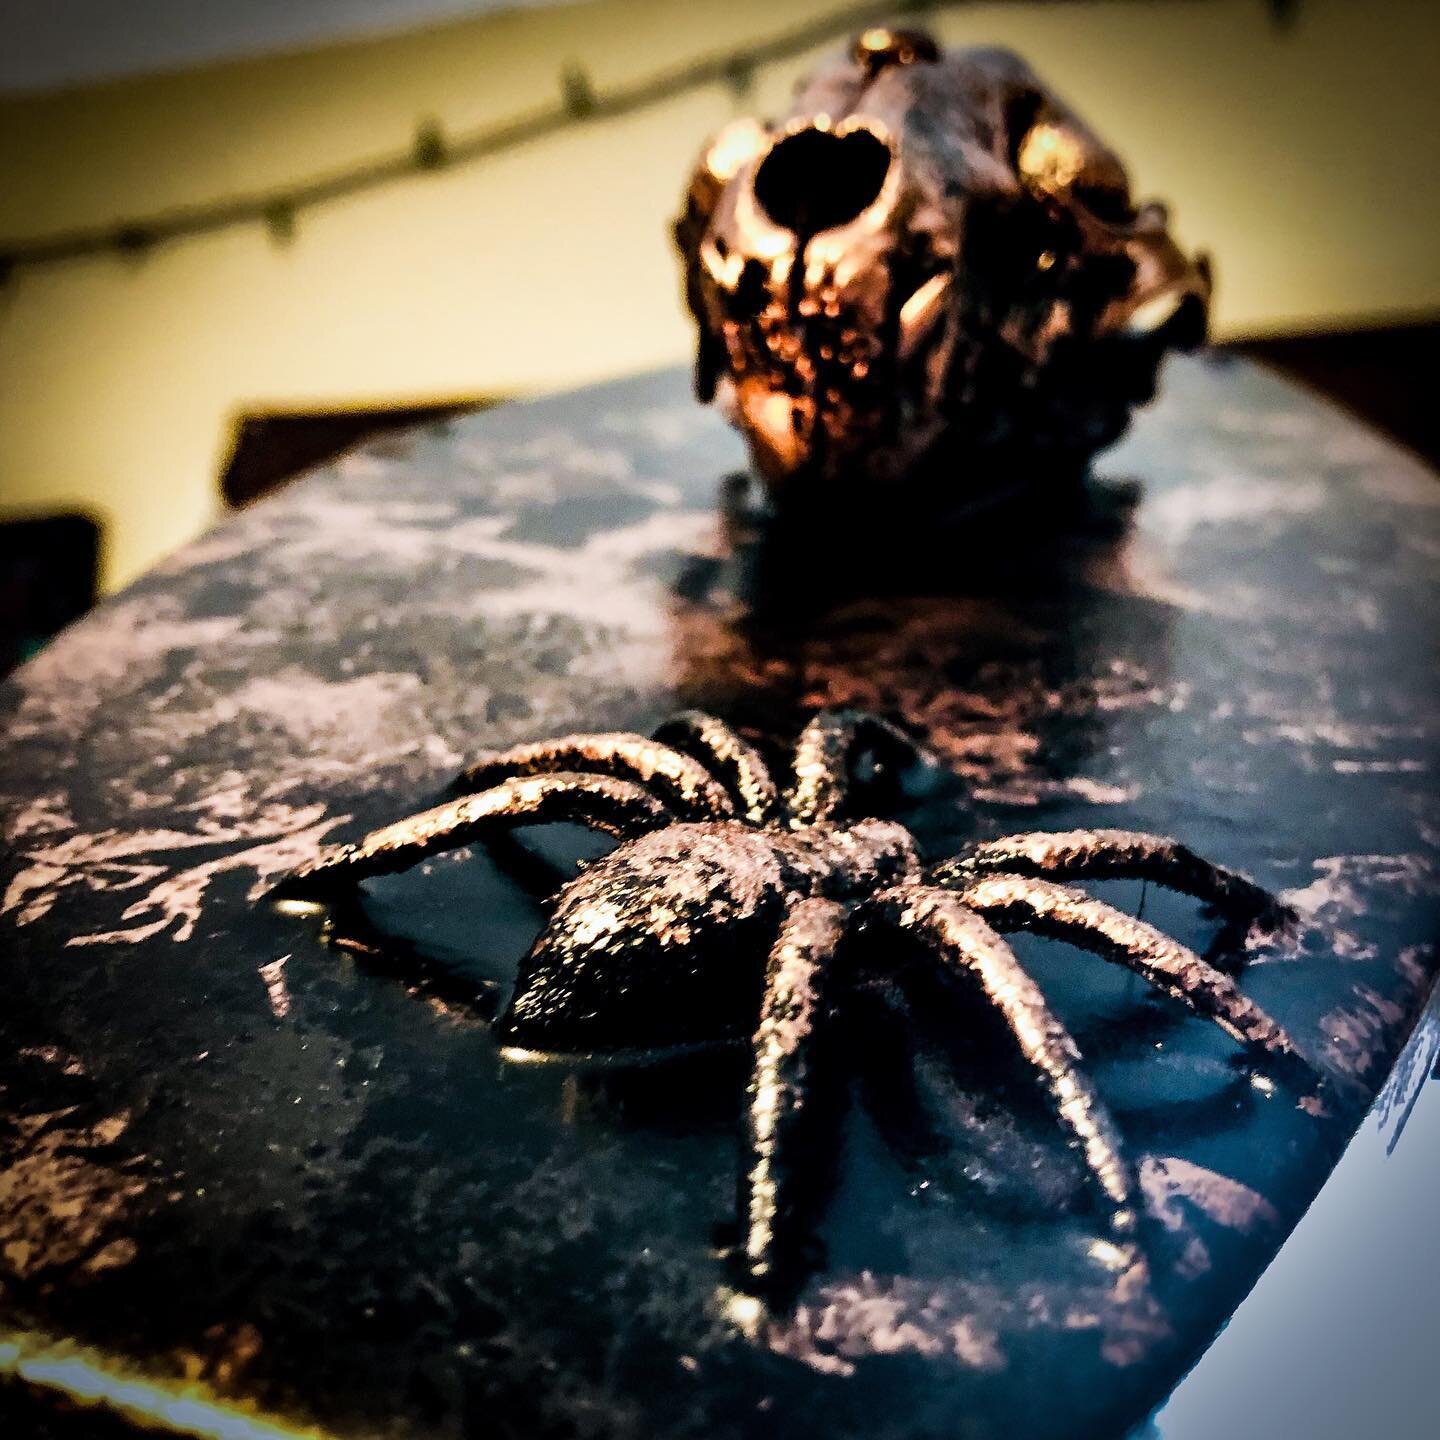 Spooky Raccoon Skull in the making! #bonecollector #vultureculture #oddities #raccoonskull #skullartist #lifeisartstartcreating #spider #art #mixedmedia #sculpture #boneartist #metallicpaint #creepyart #inthemaking #northdakotaartist #skullsbykortney